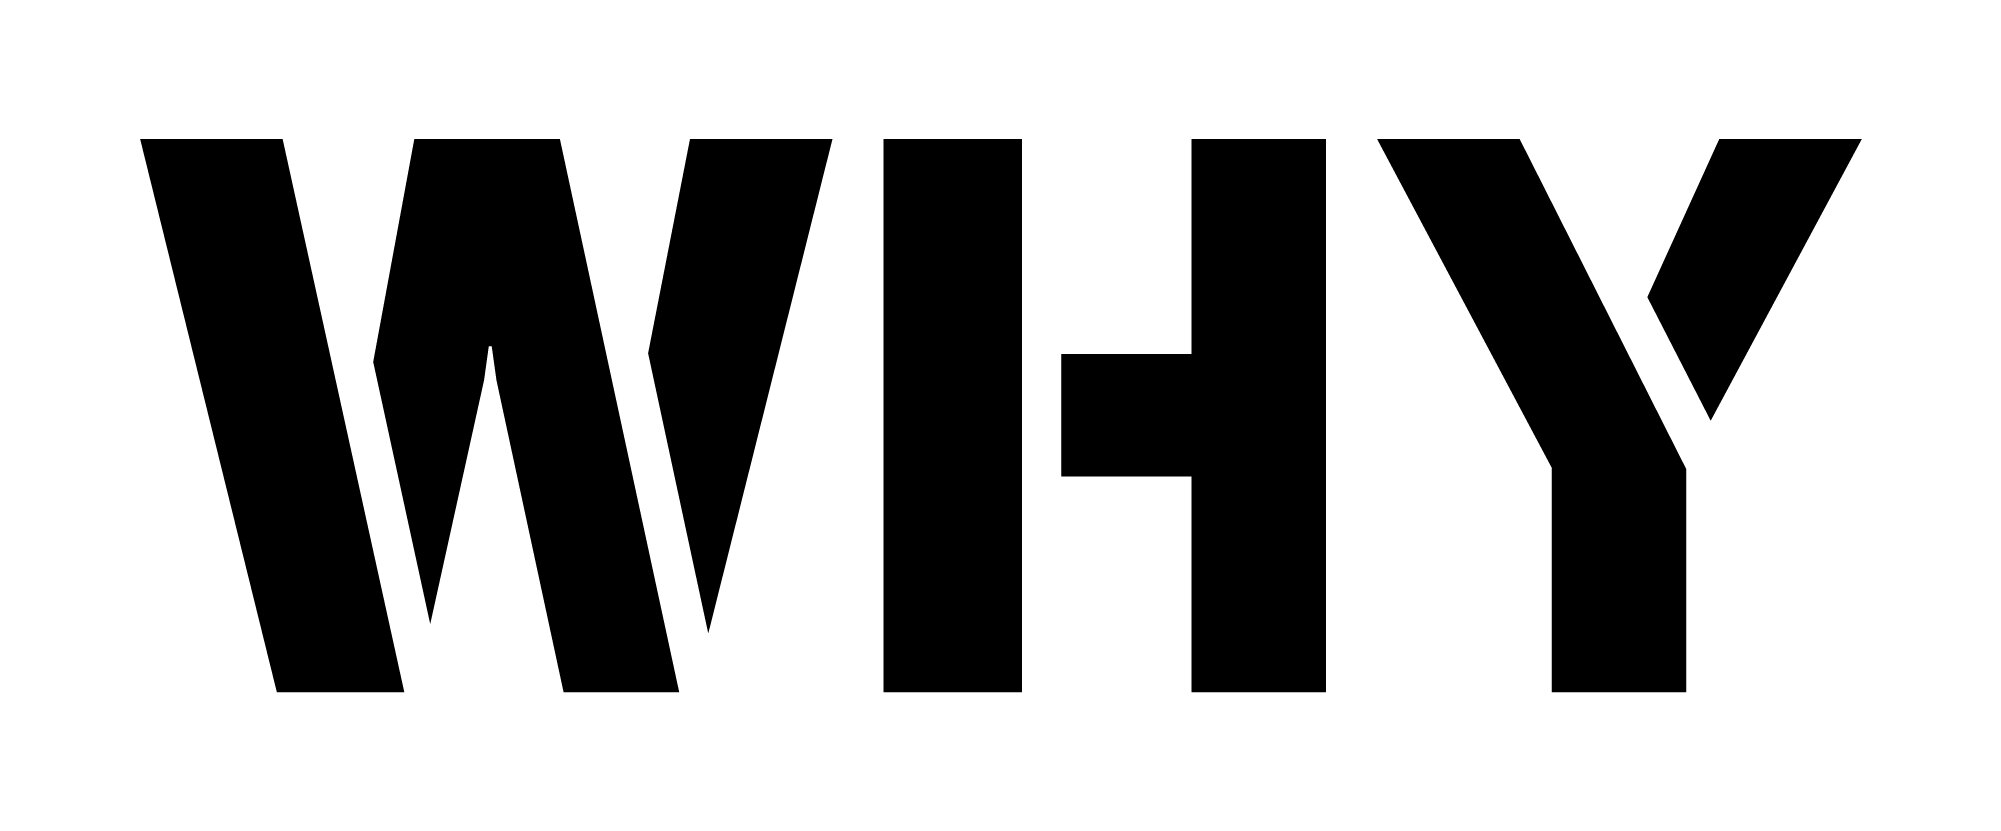 WHY-logo-black.jpg